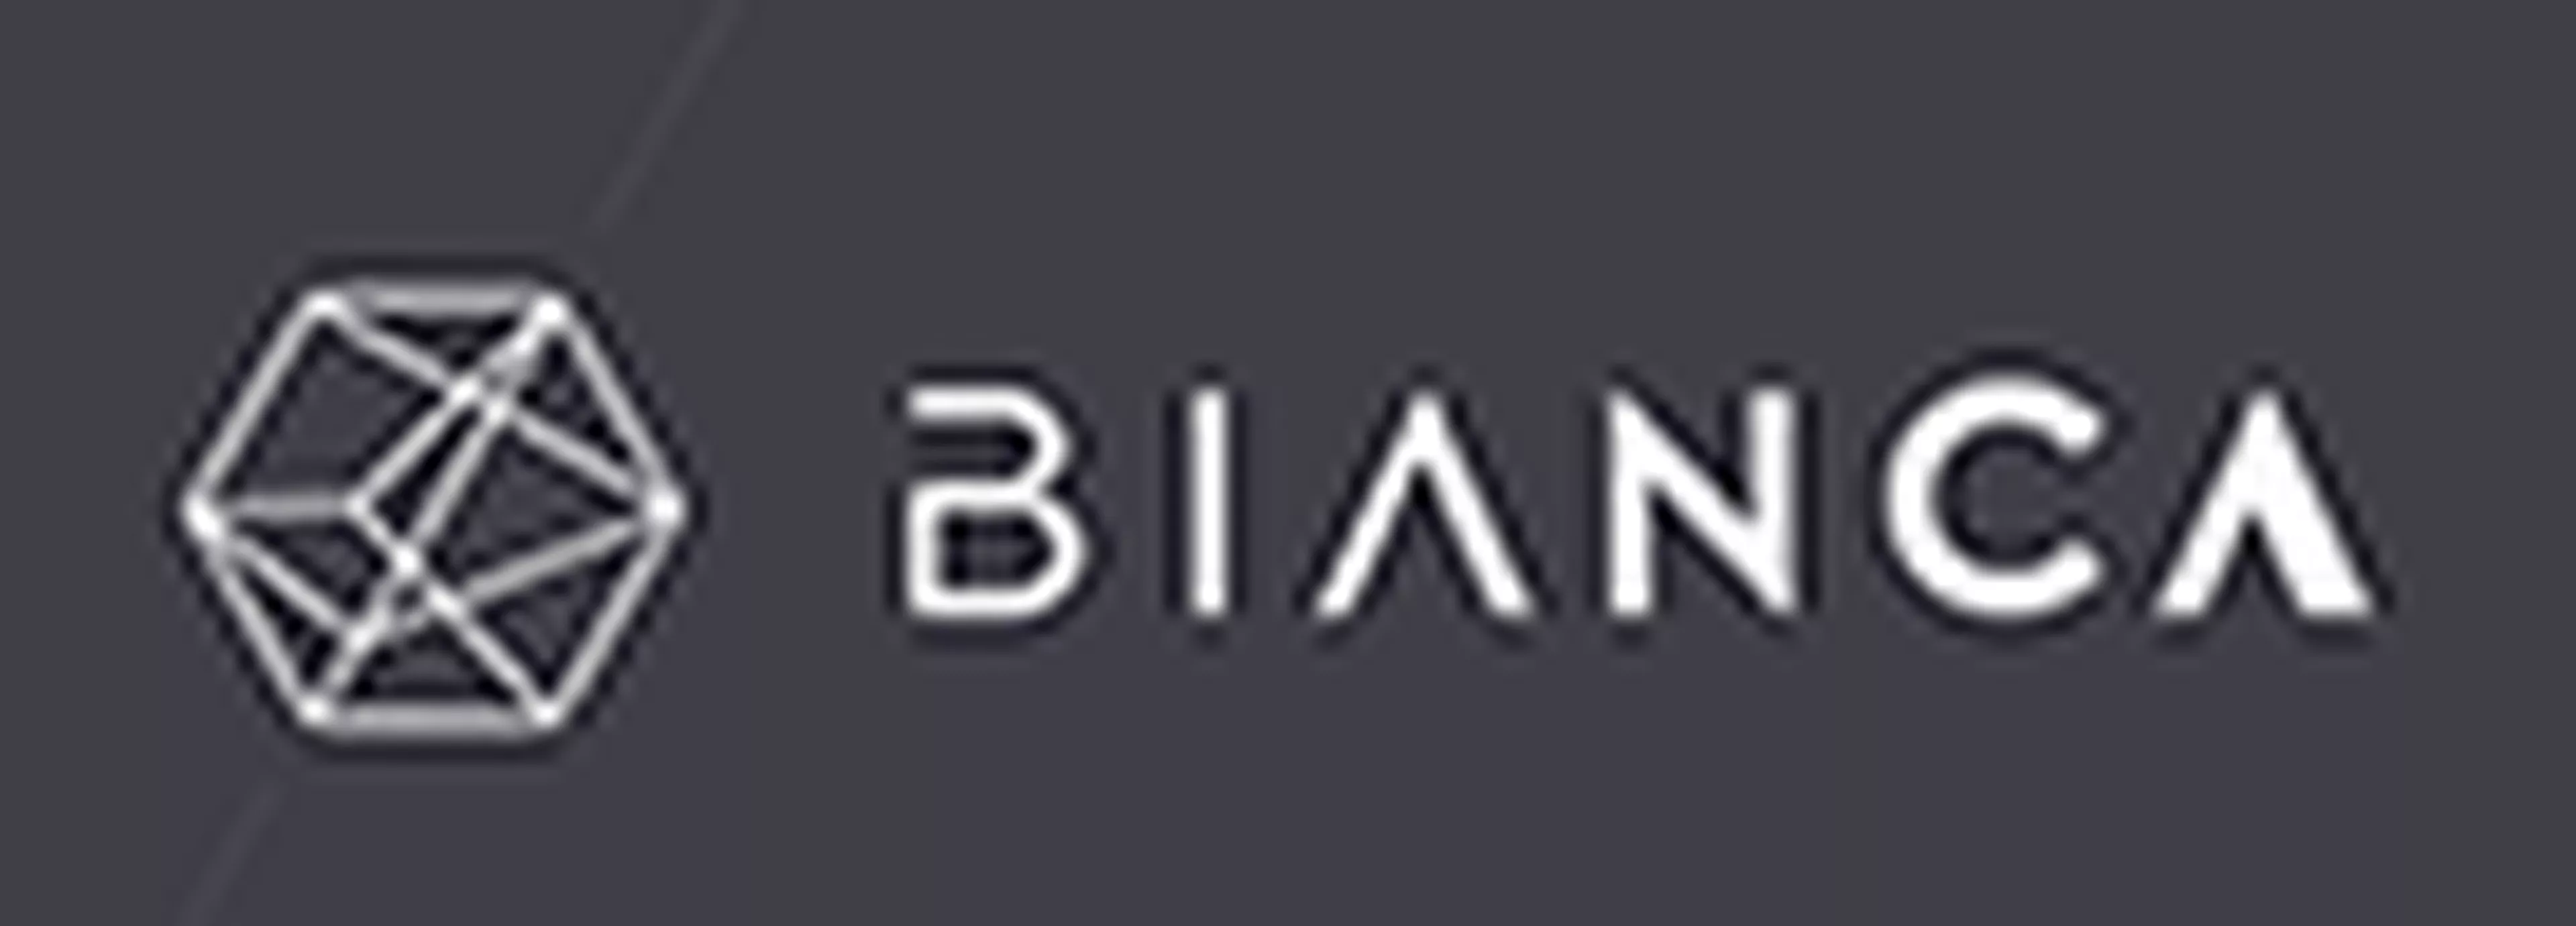 Ceramika Bianca logo